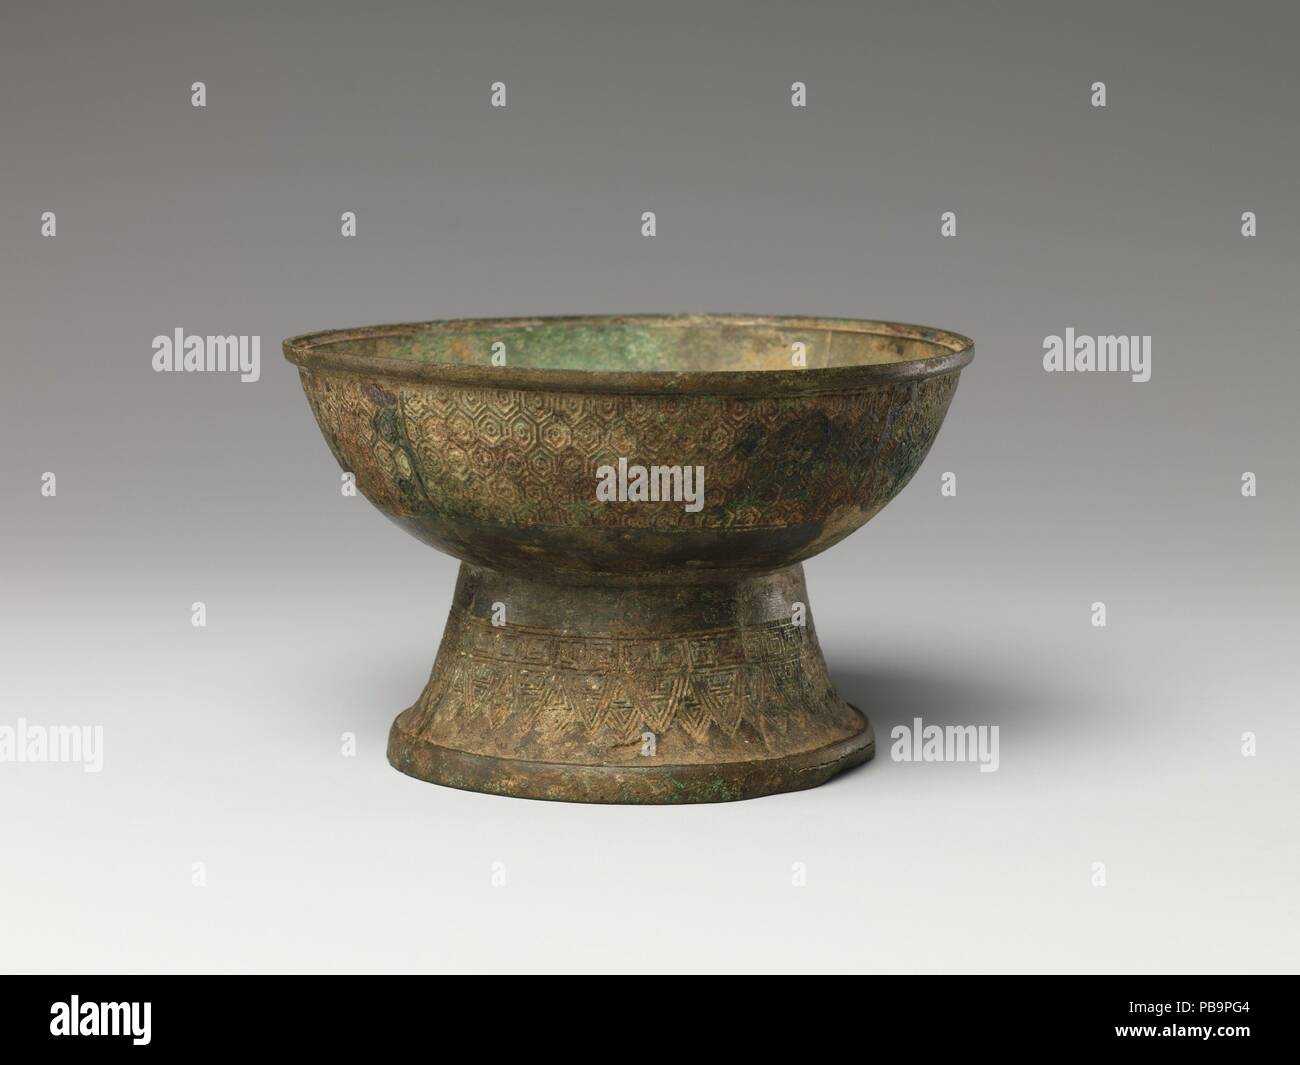 Schüssel. Kultur: China. Abmessungen: H.2 11/16 in. (6,8 cm); Durchm. 4 7/17 in. (11,3 cm). Museum: Metropolitan Museum of Art, New York, USA. Stockfoto